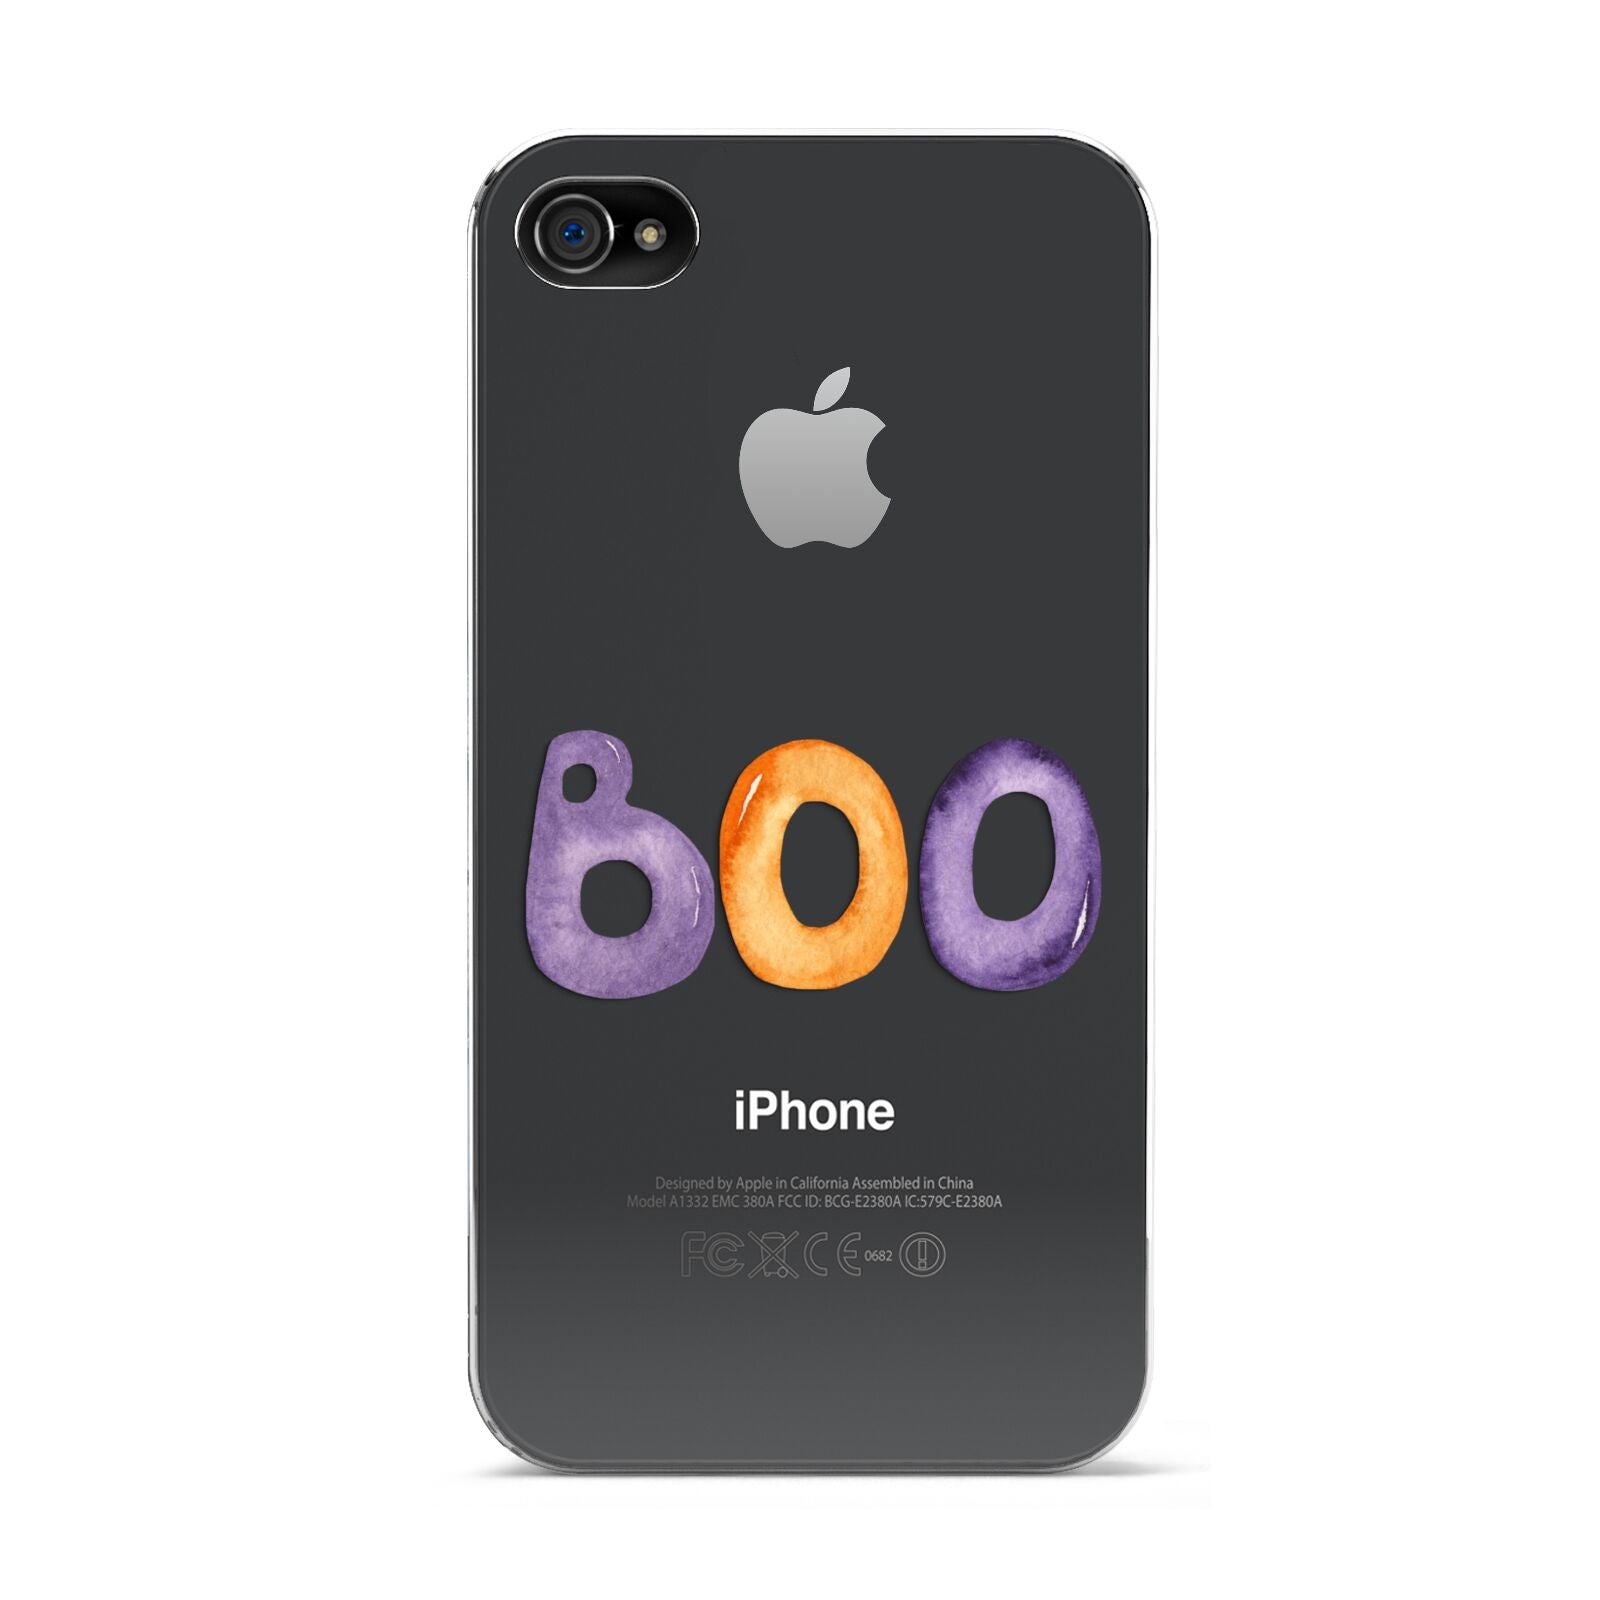 Boo Apple iPhone 4s Case